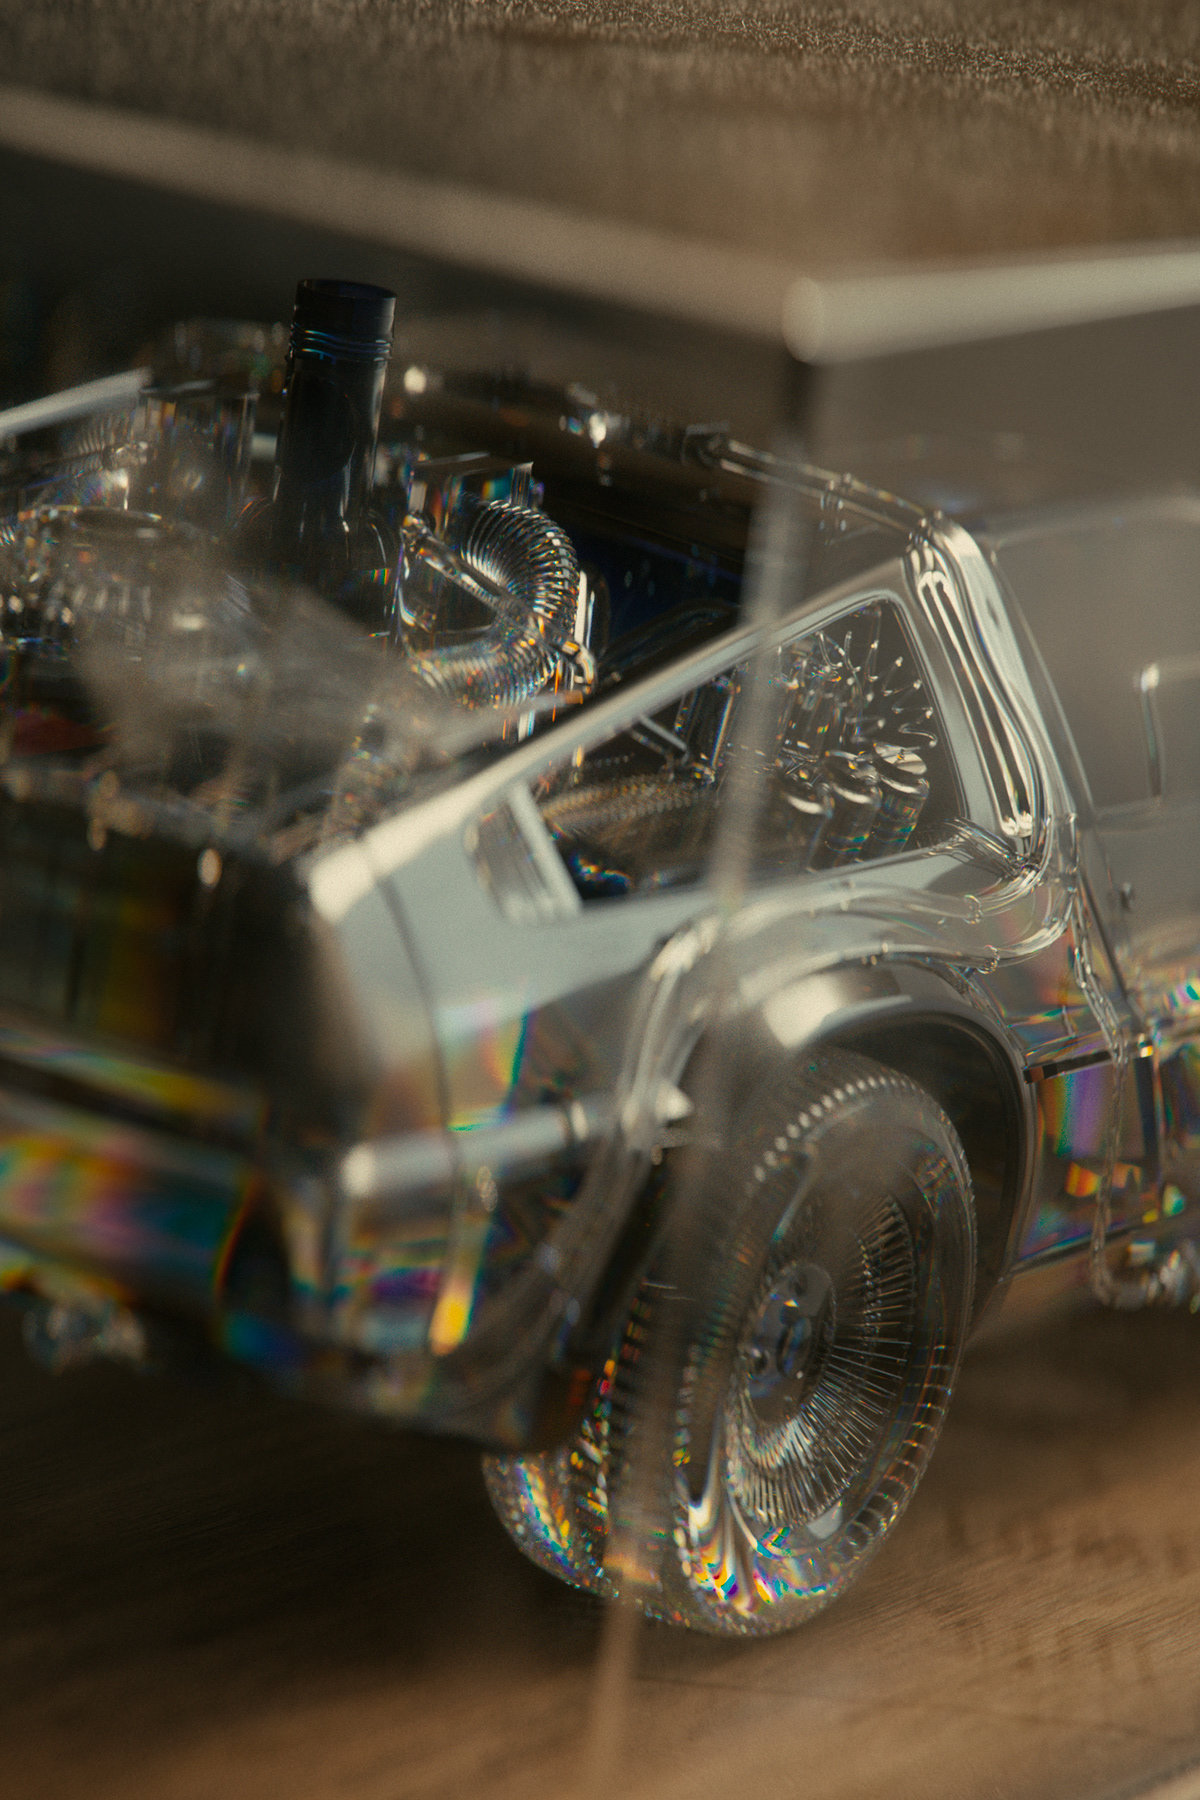 3D back CGI Cinema crystal DeLorean DMC future rendering bttf